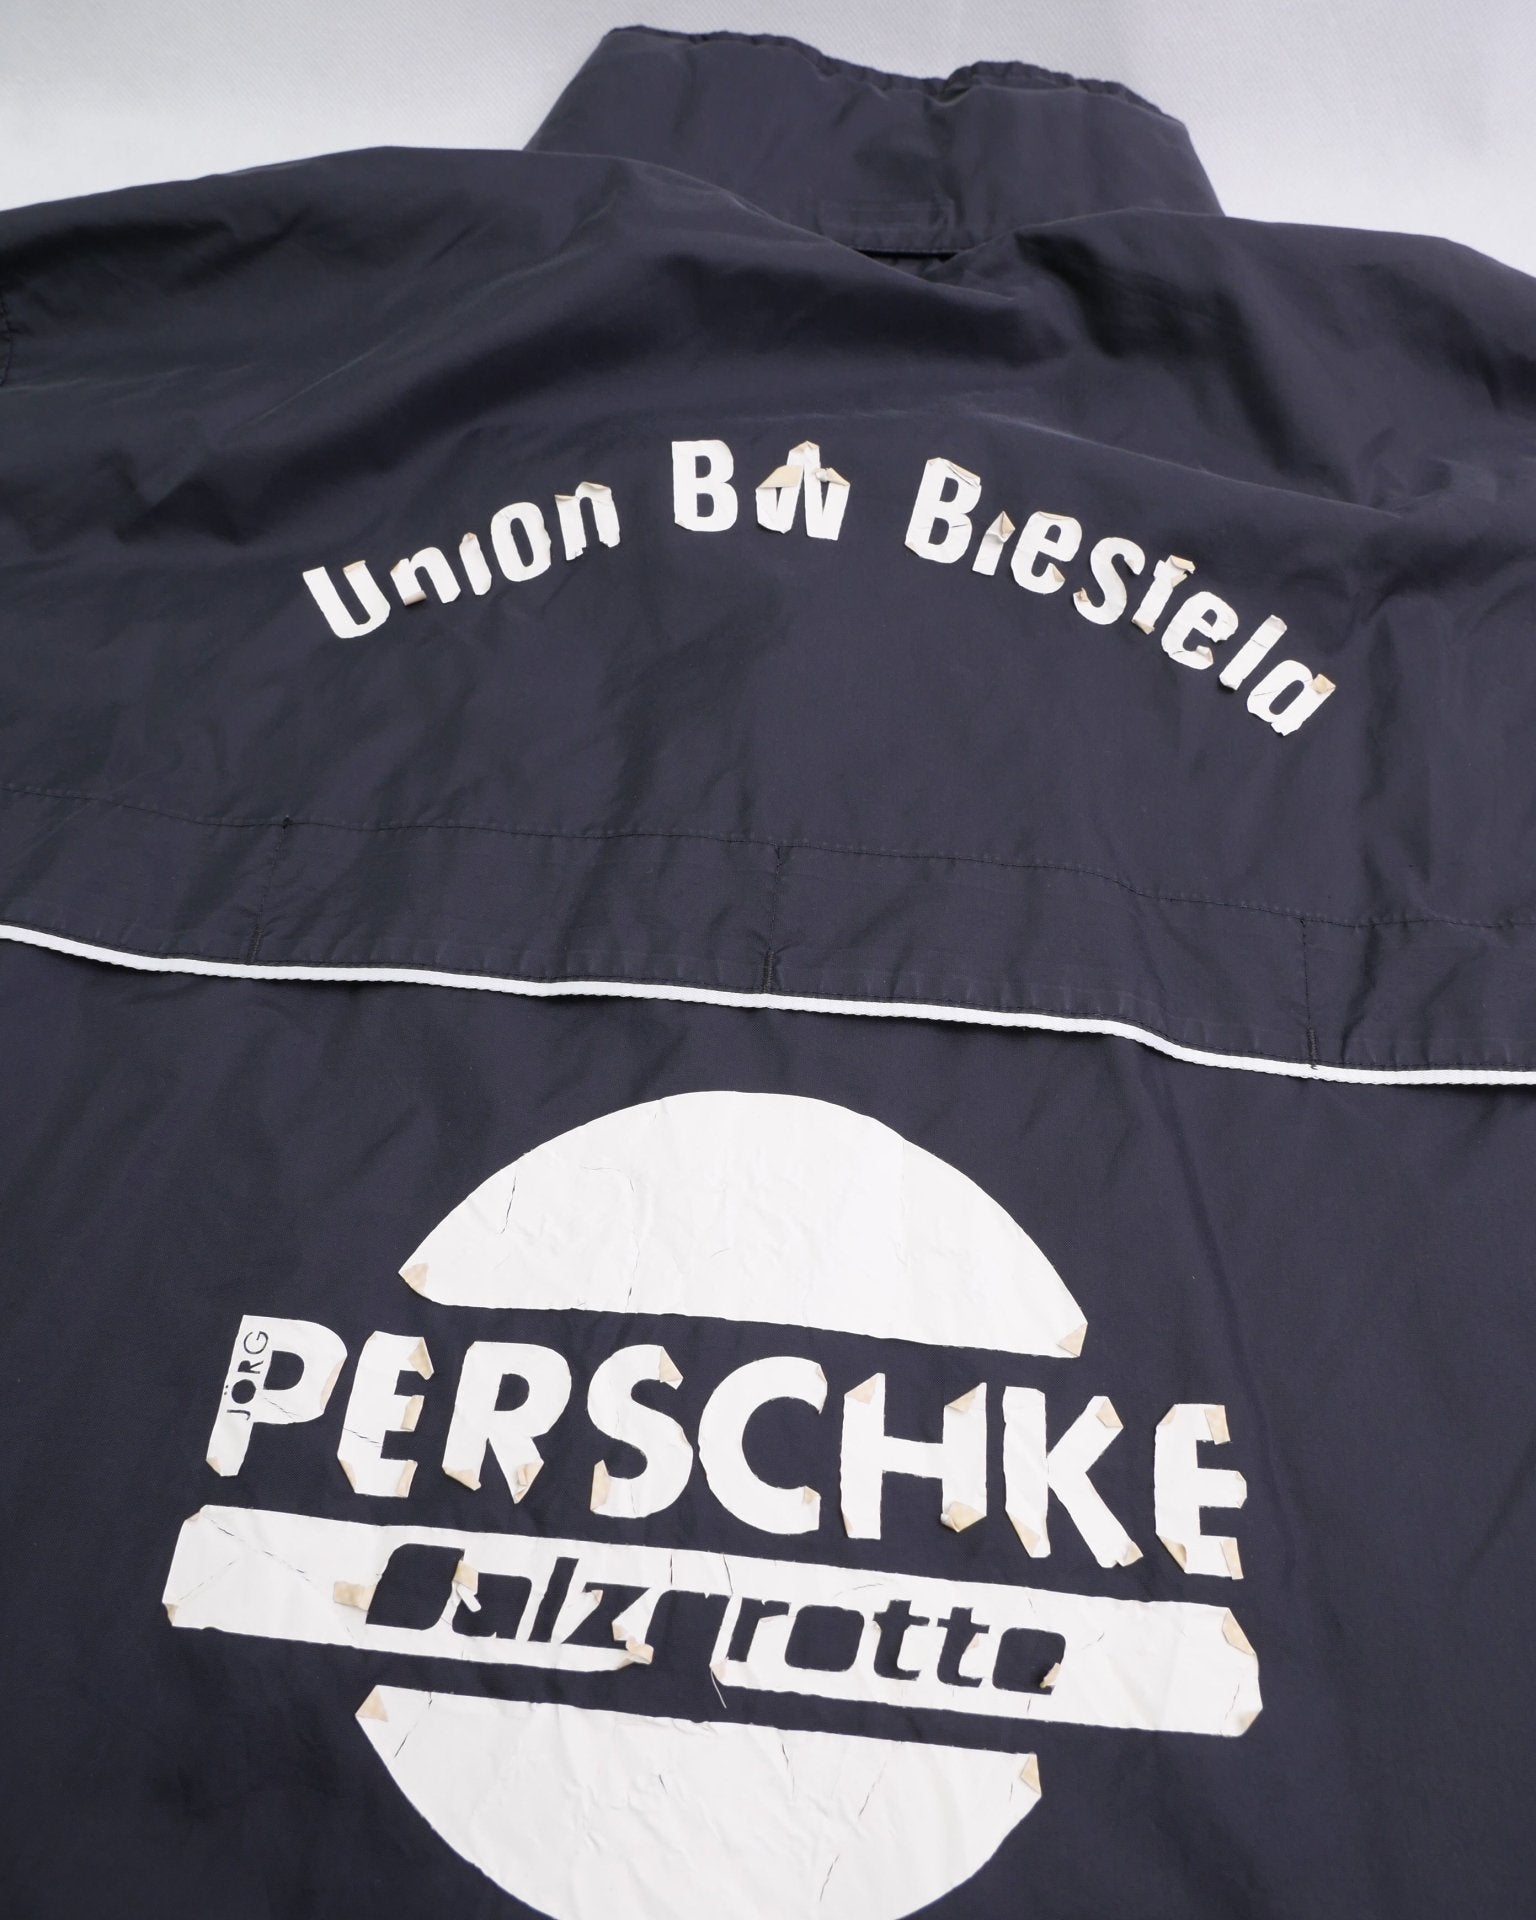 adidas Union BW Biestela printed Logo Track Jacket - Peeces